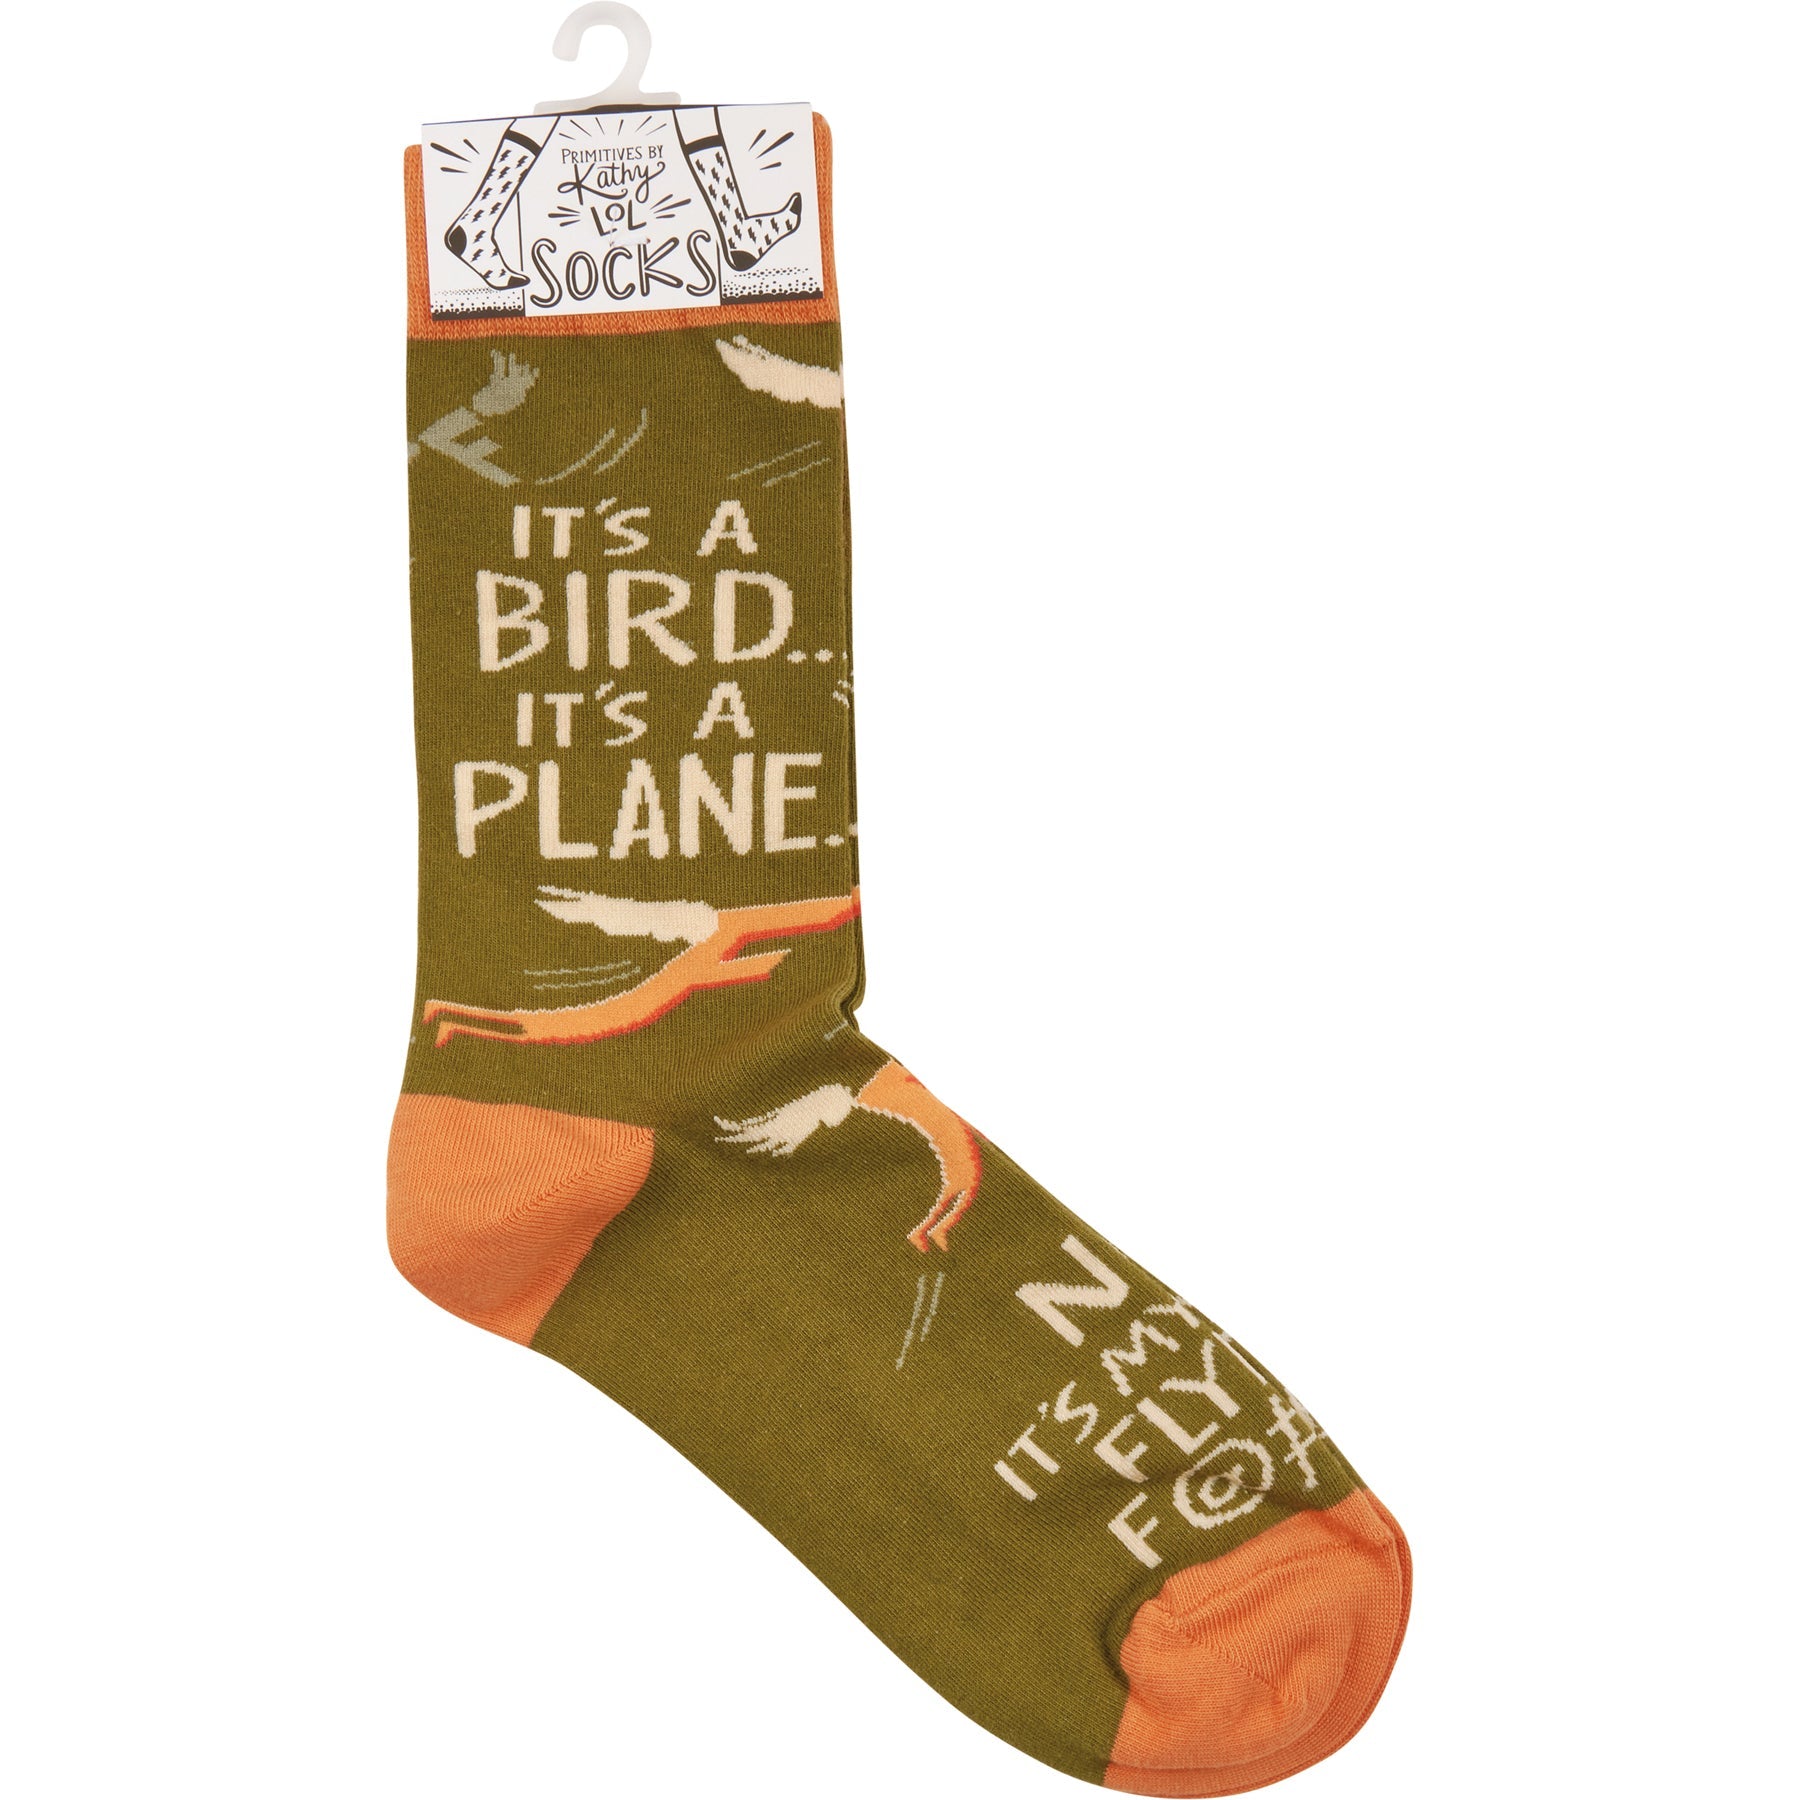 My Last Flying F@#* Socks | Colorful Novelty Unisex Socks